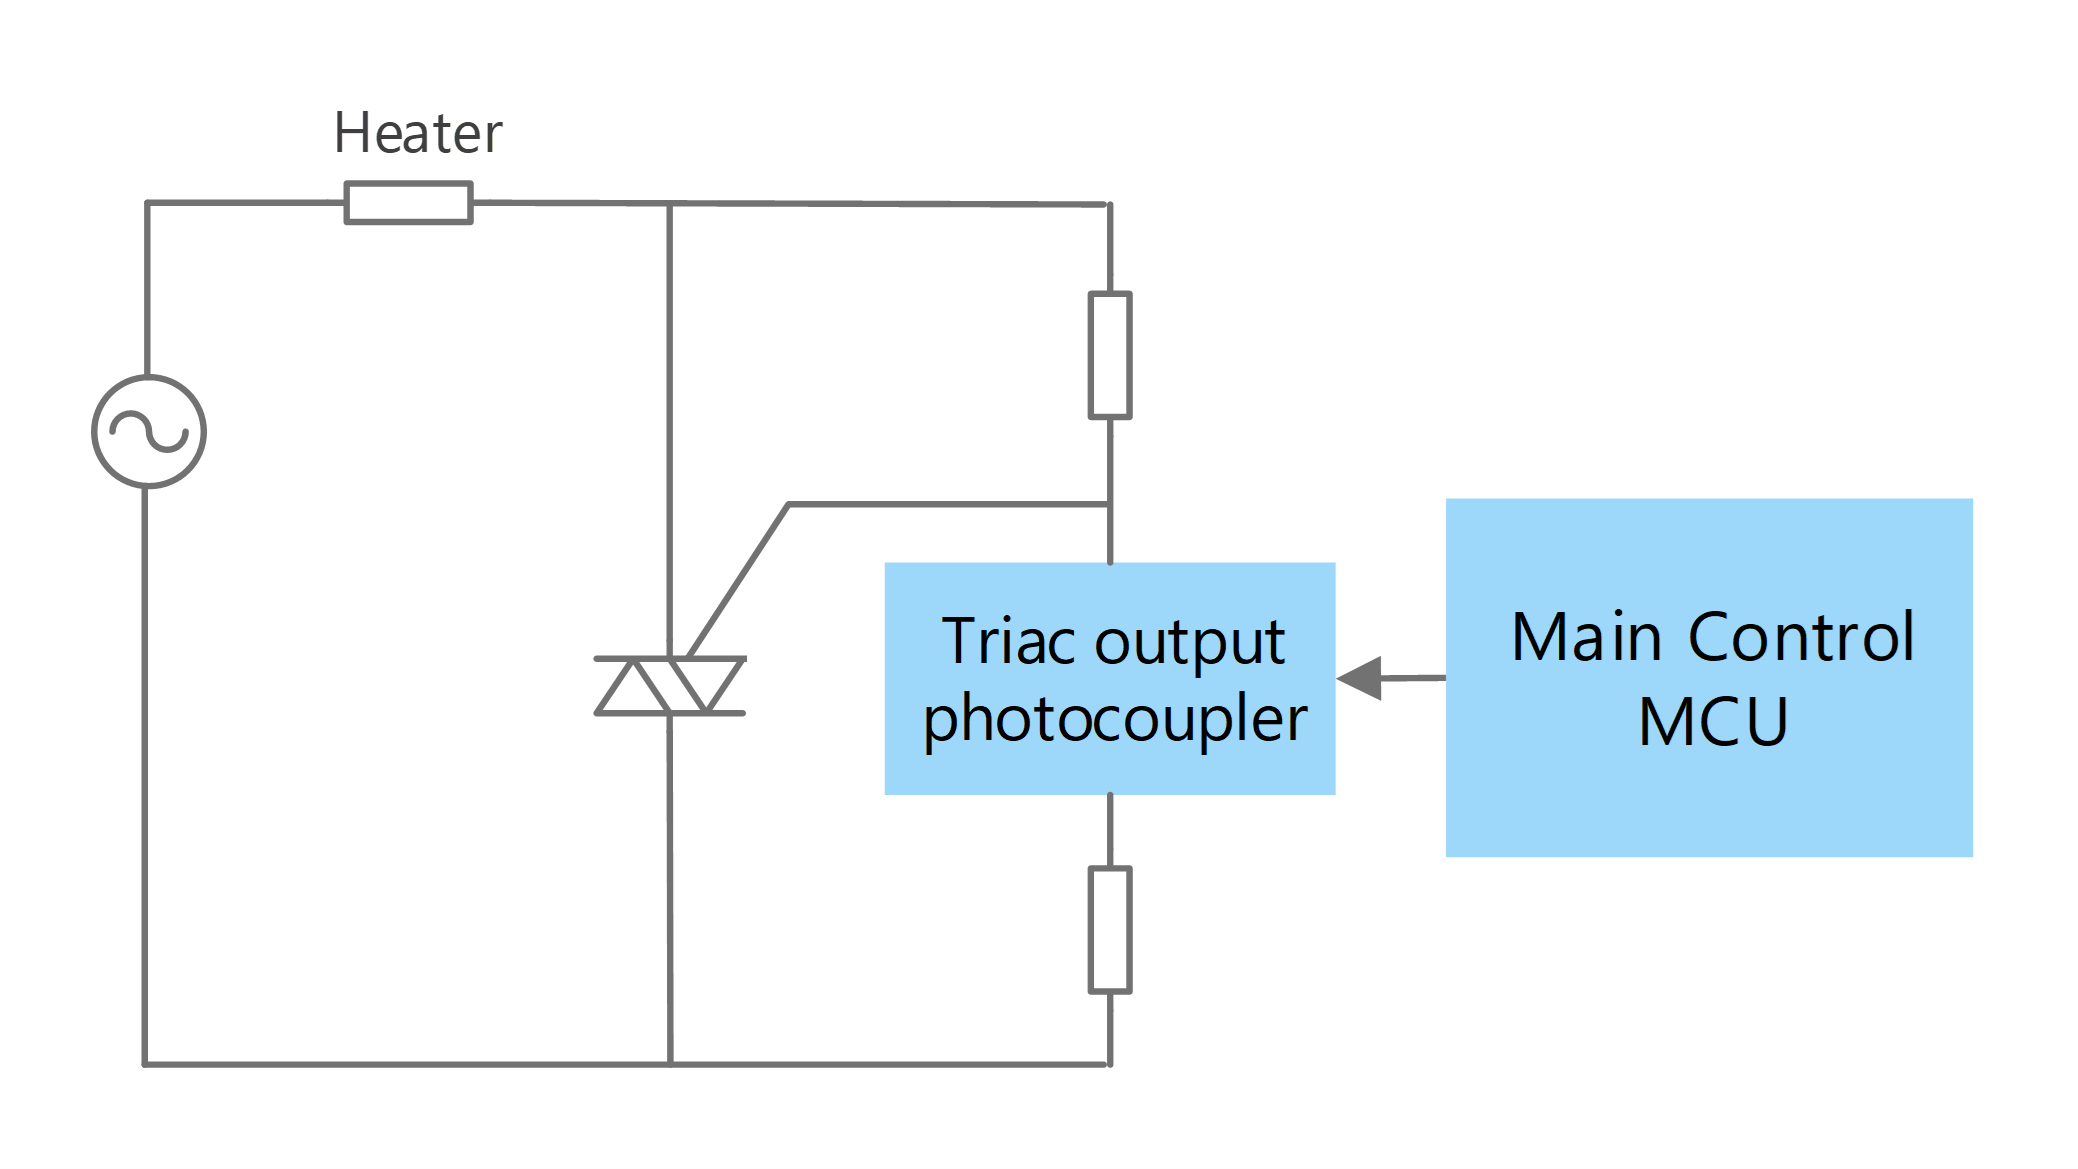 Heater control circuit